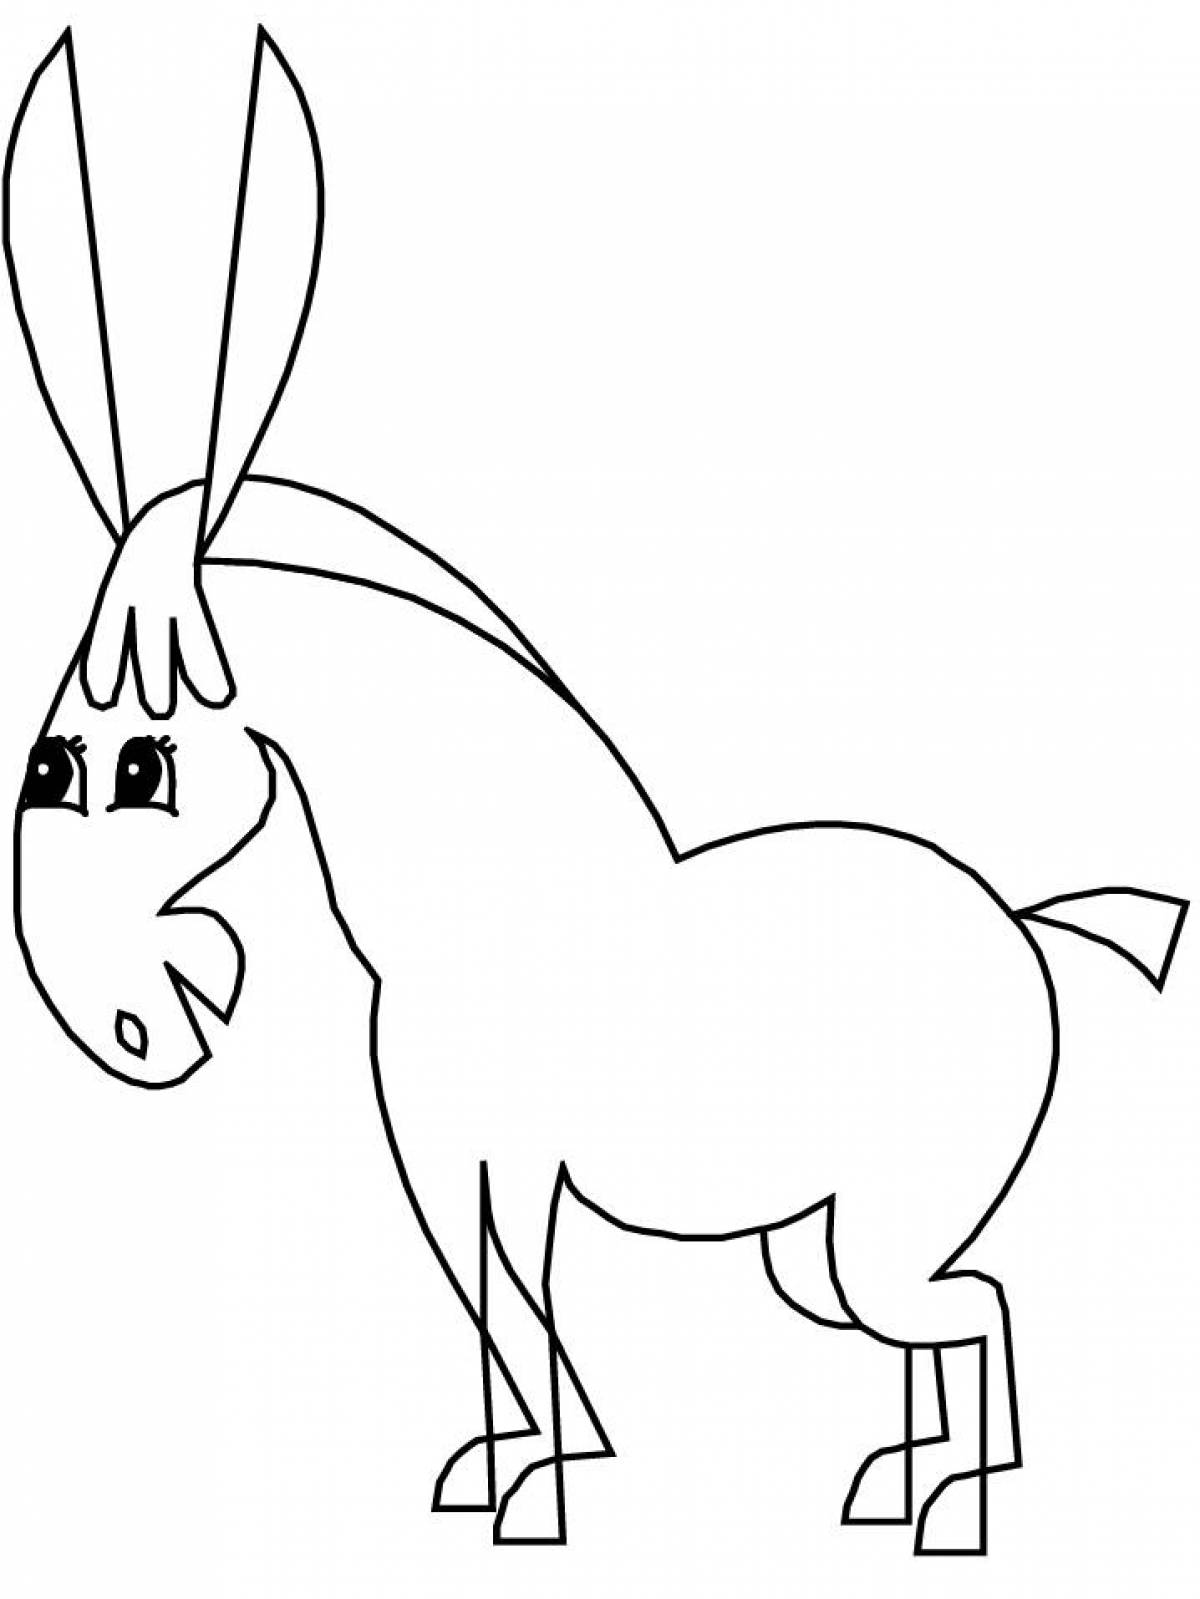 Playful donkey coloring